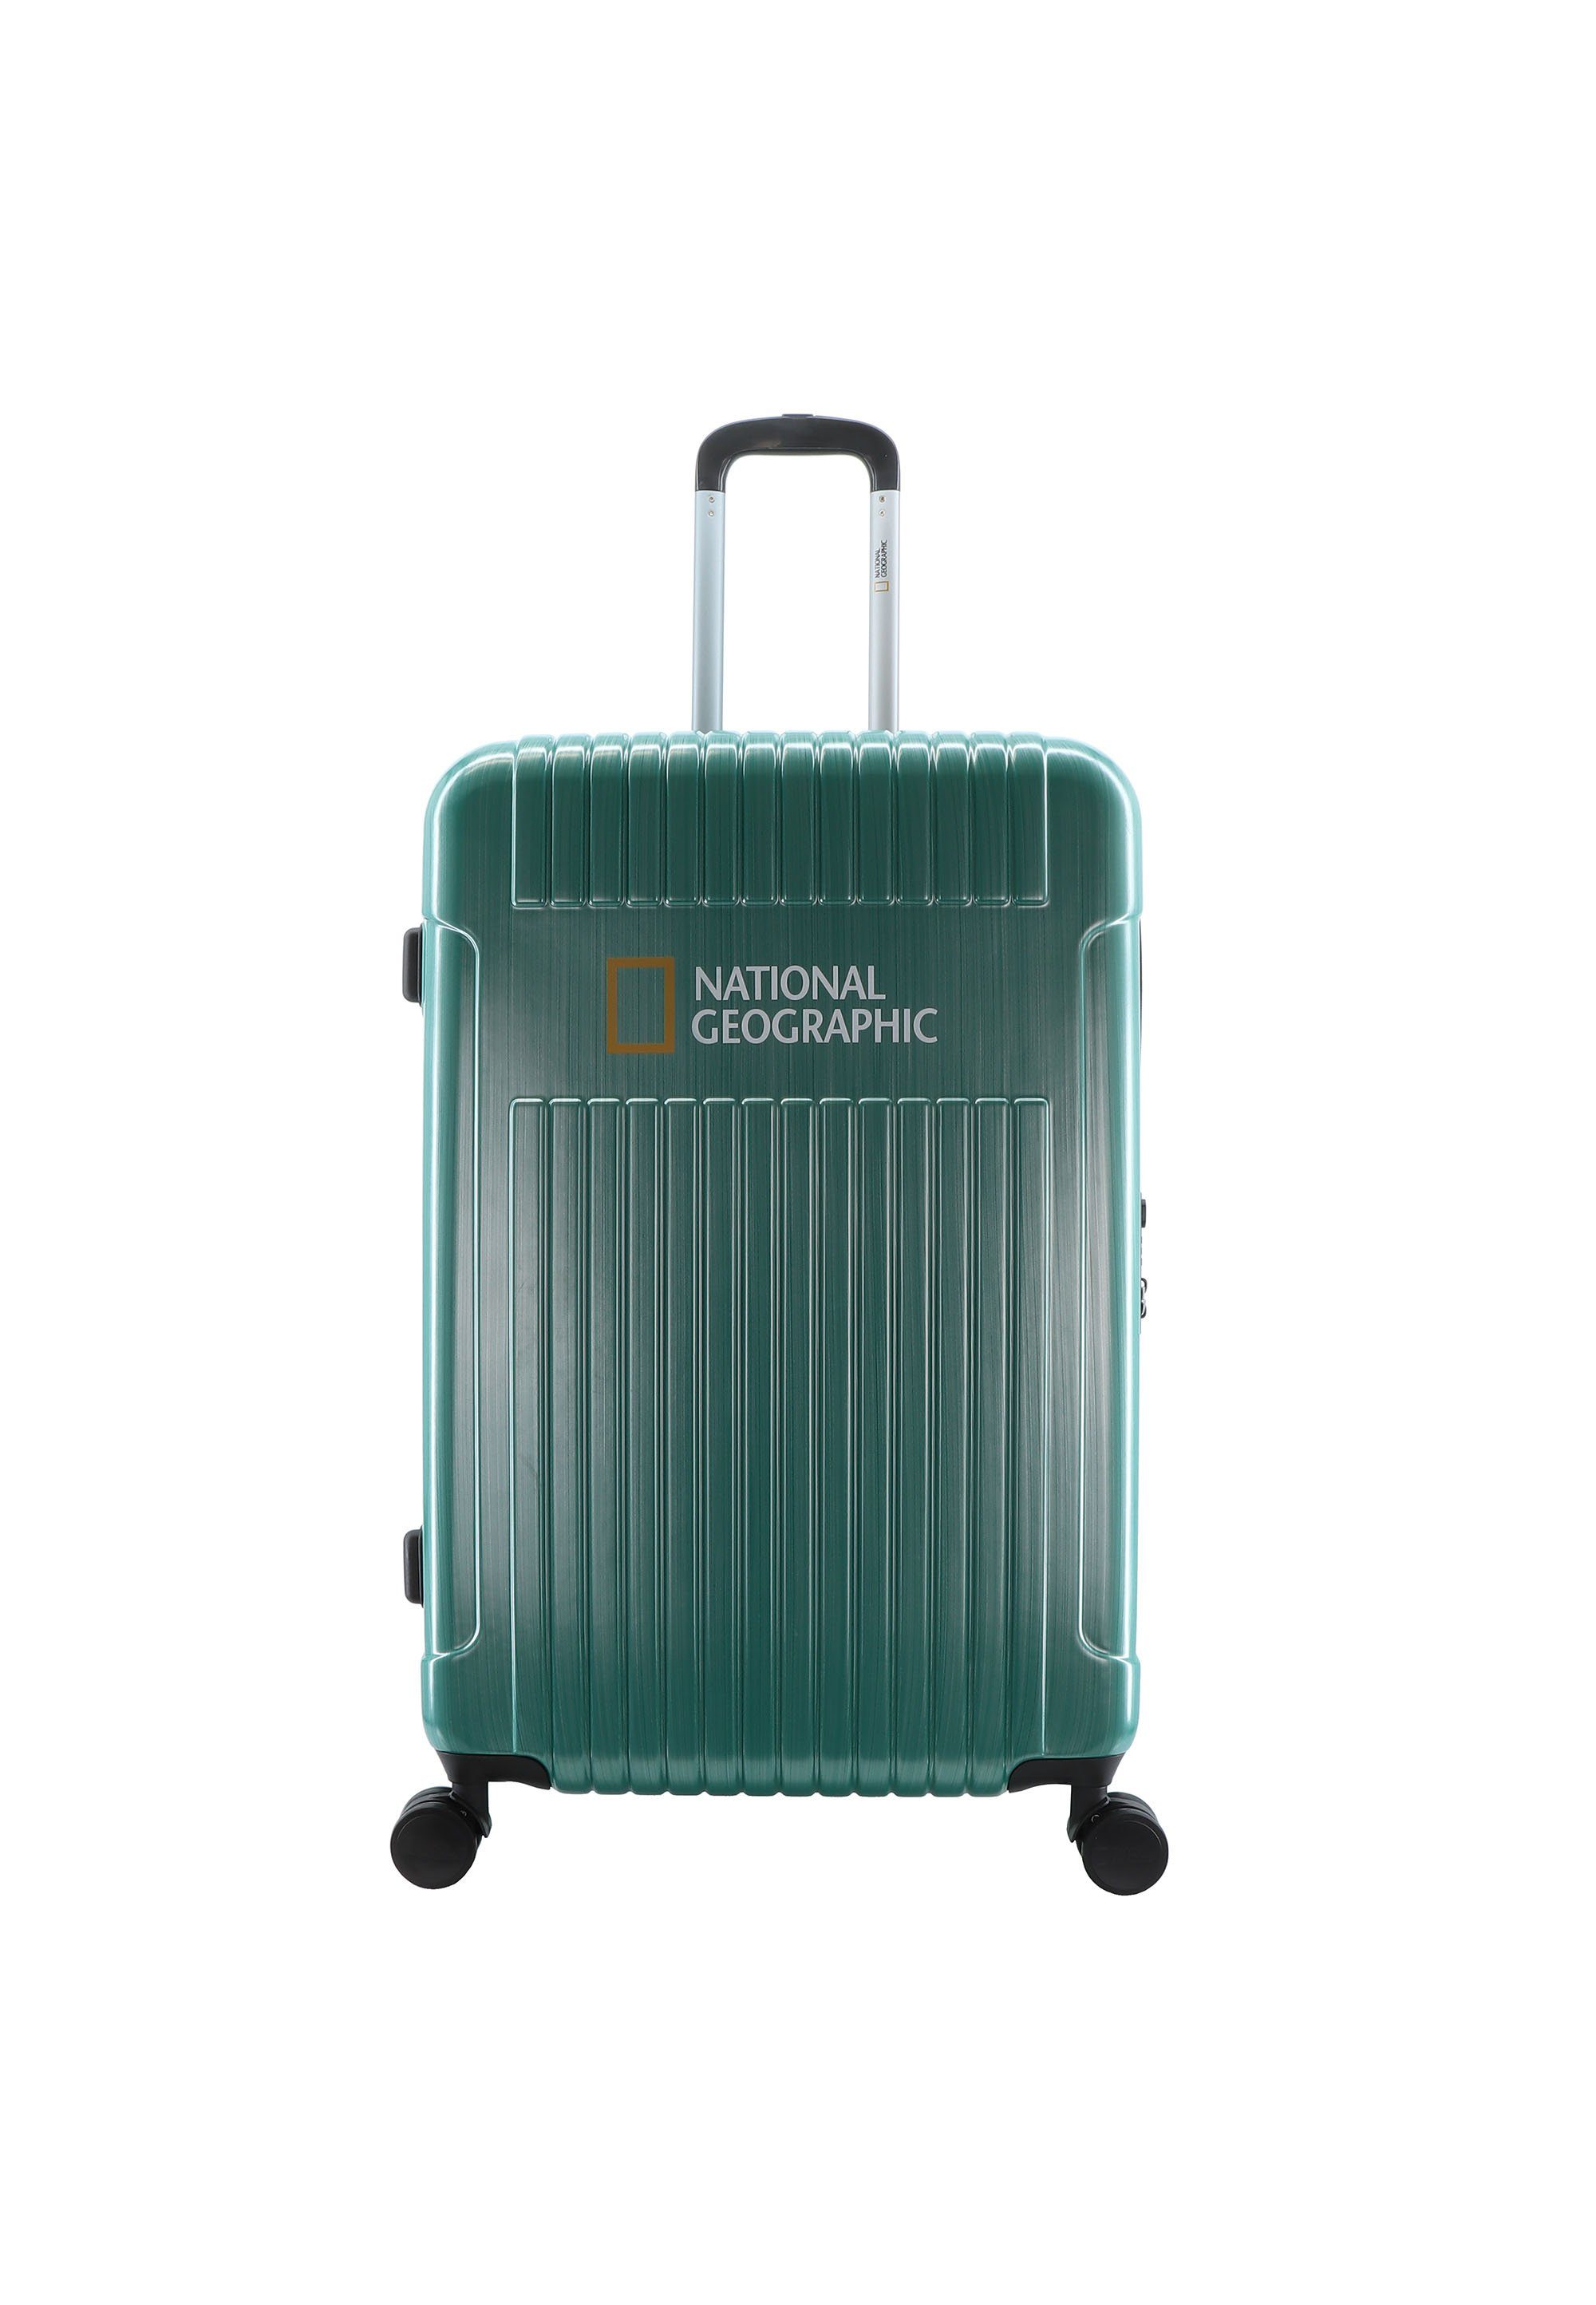 NATIONAL GEOGRAPHIC Koffer Transit, aus hochwertigem ABS/PC-Material